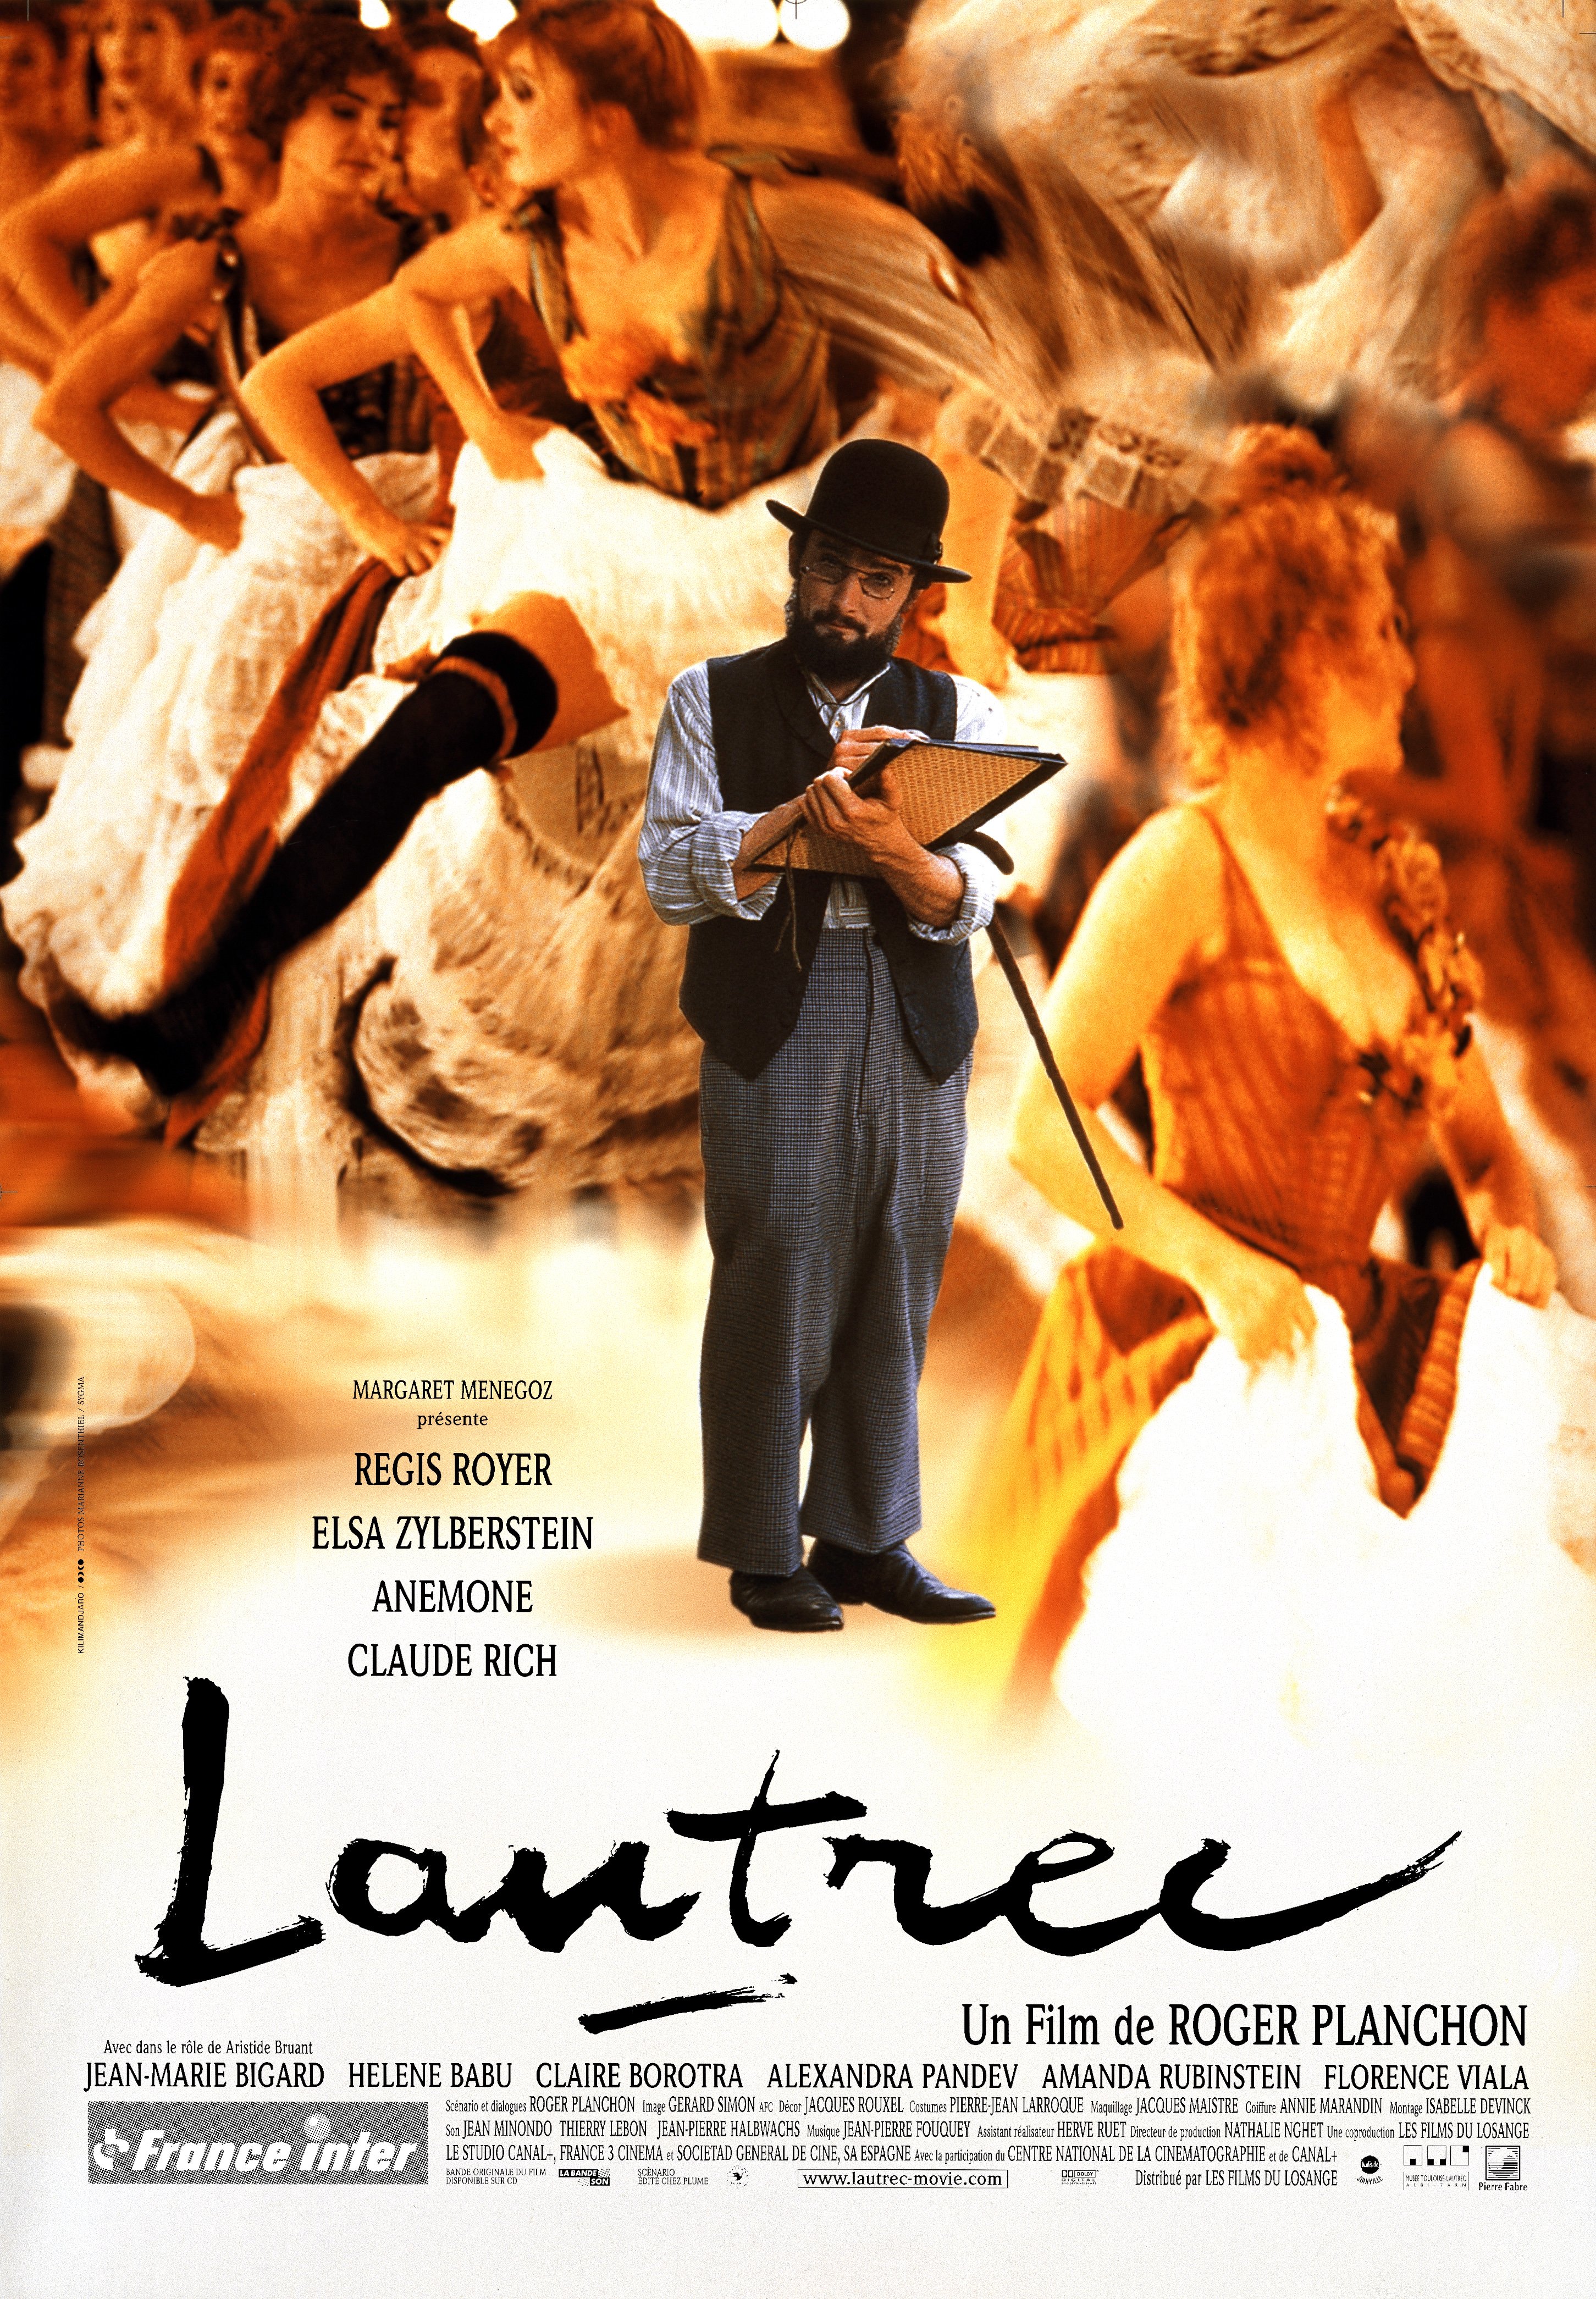 Poster of the movie Lautrec